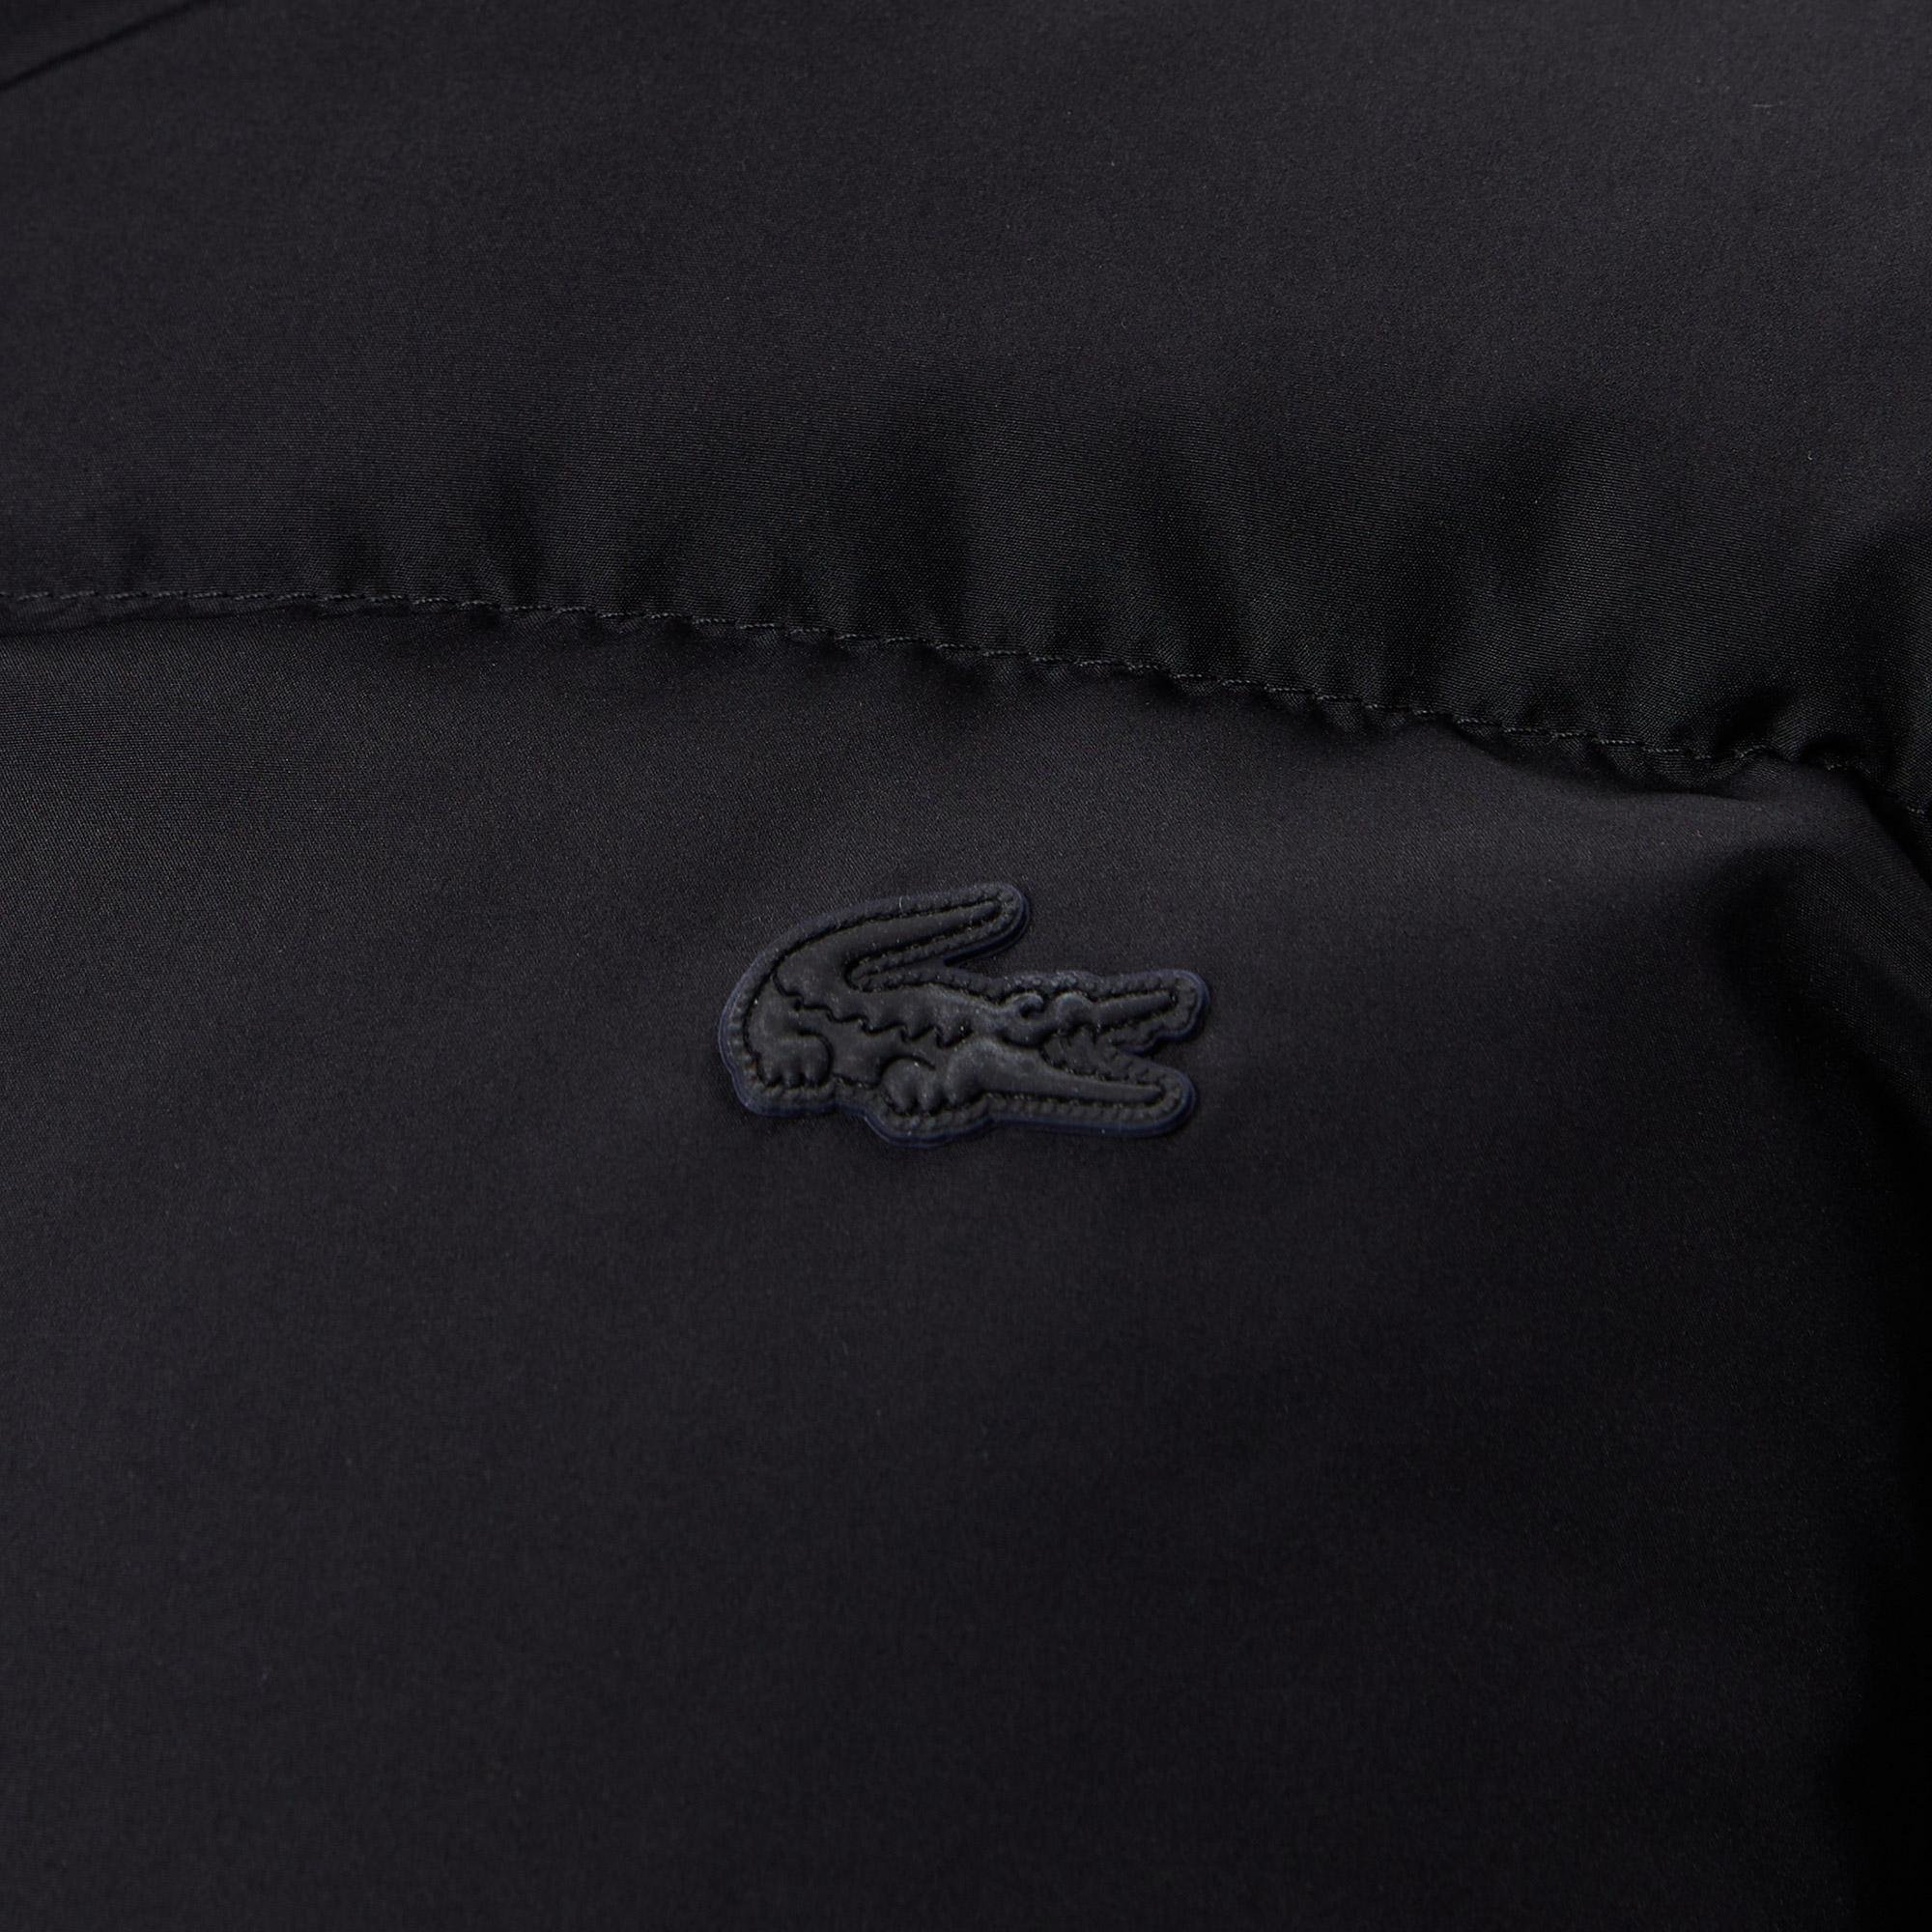 Lacoste dámska skladacia taftová vystužená bunda